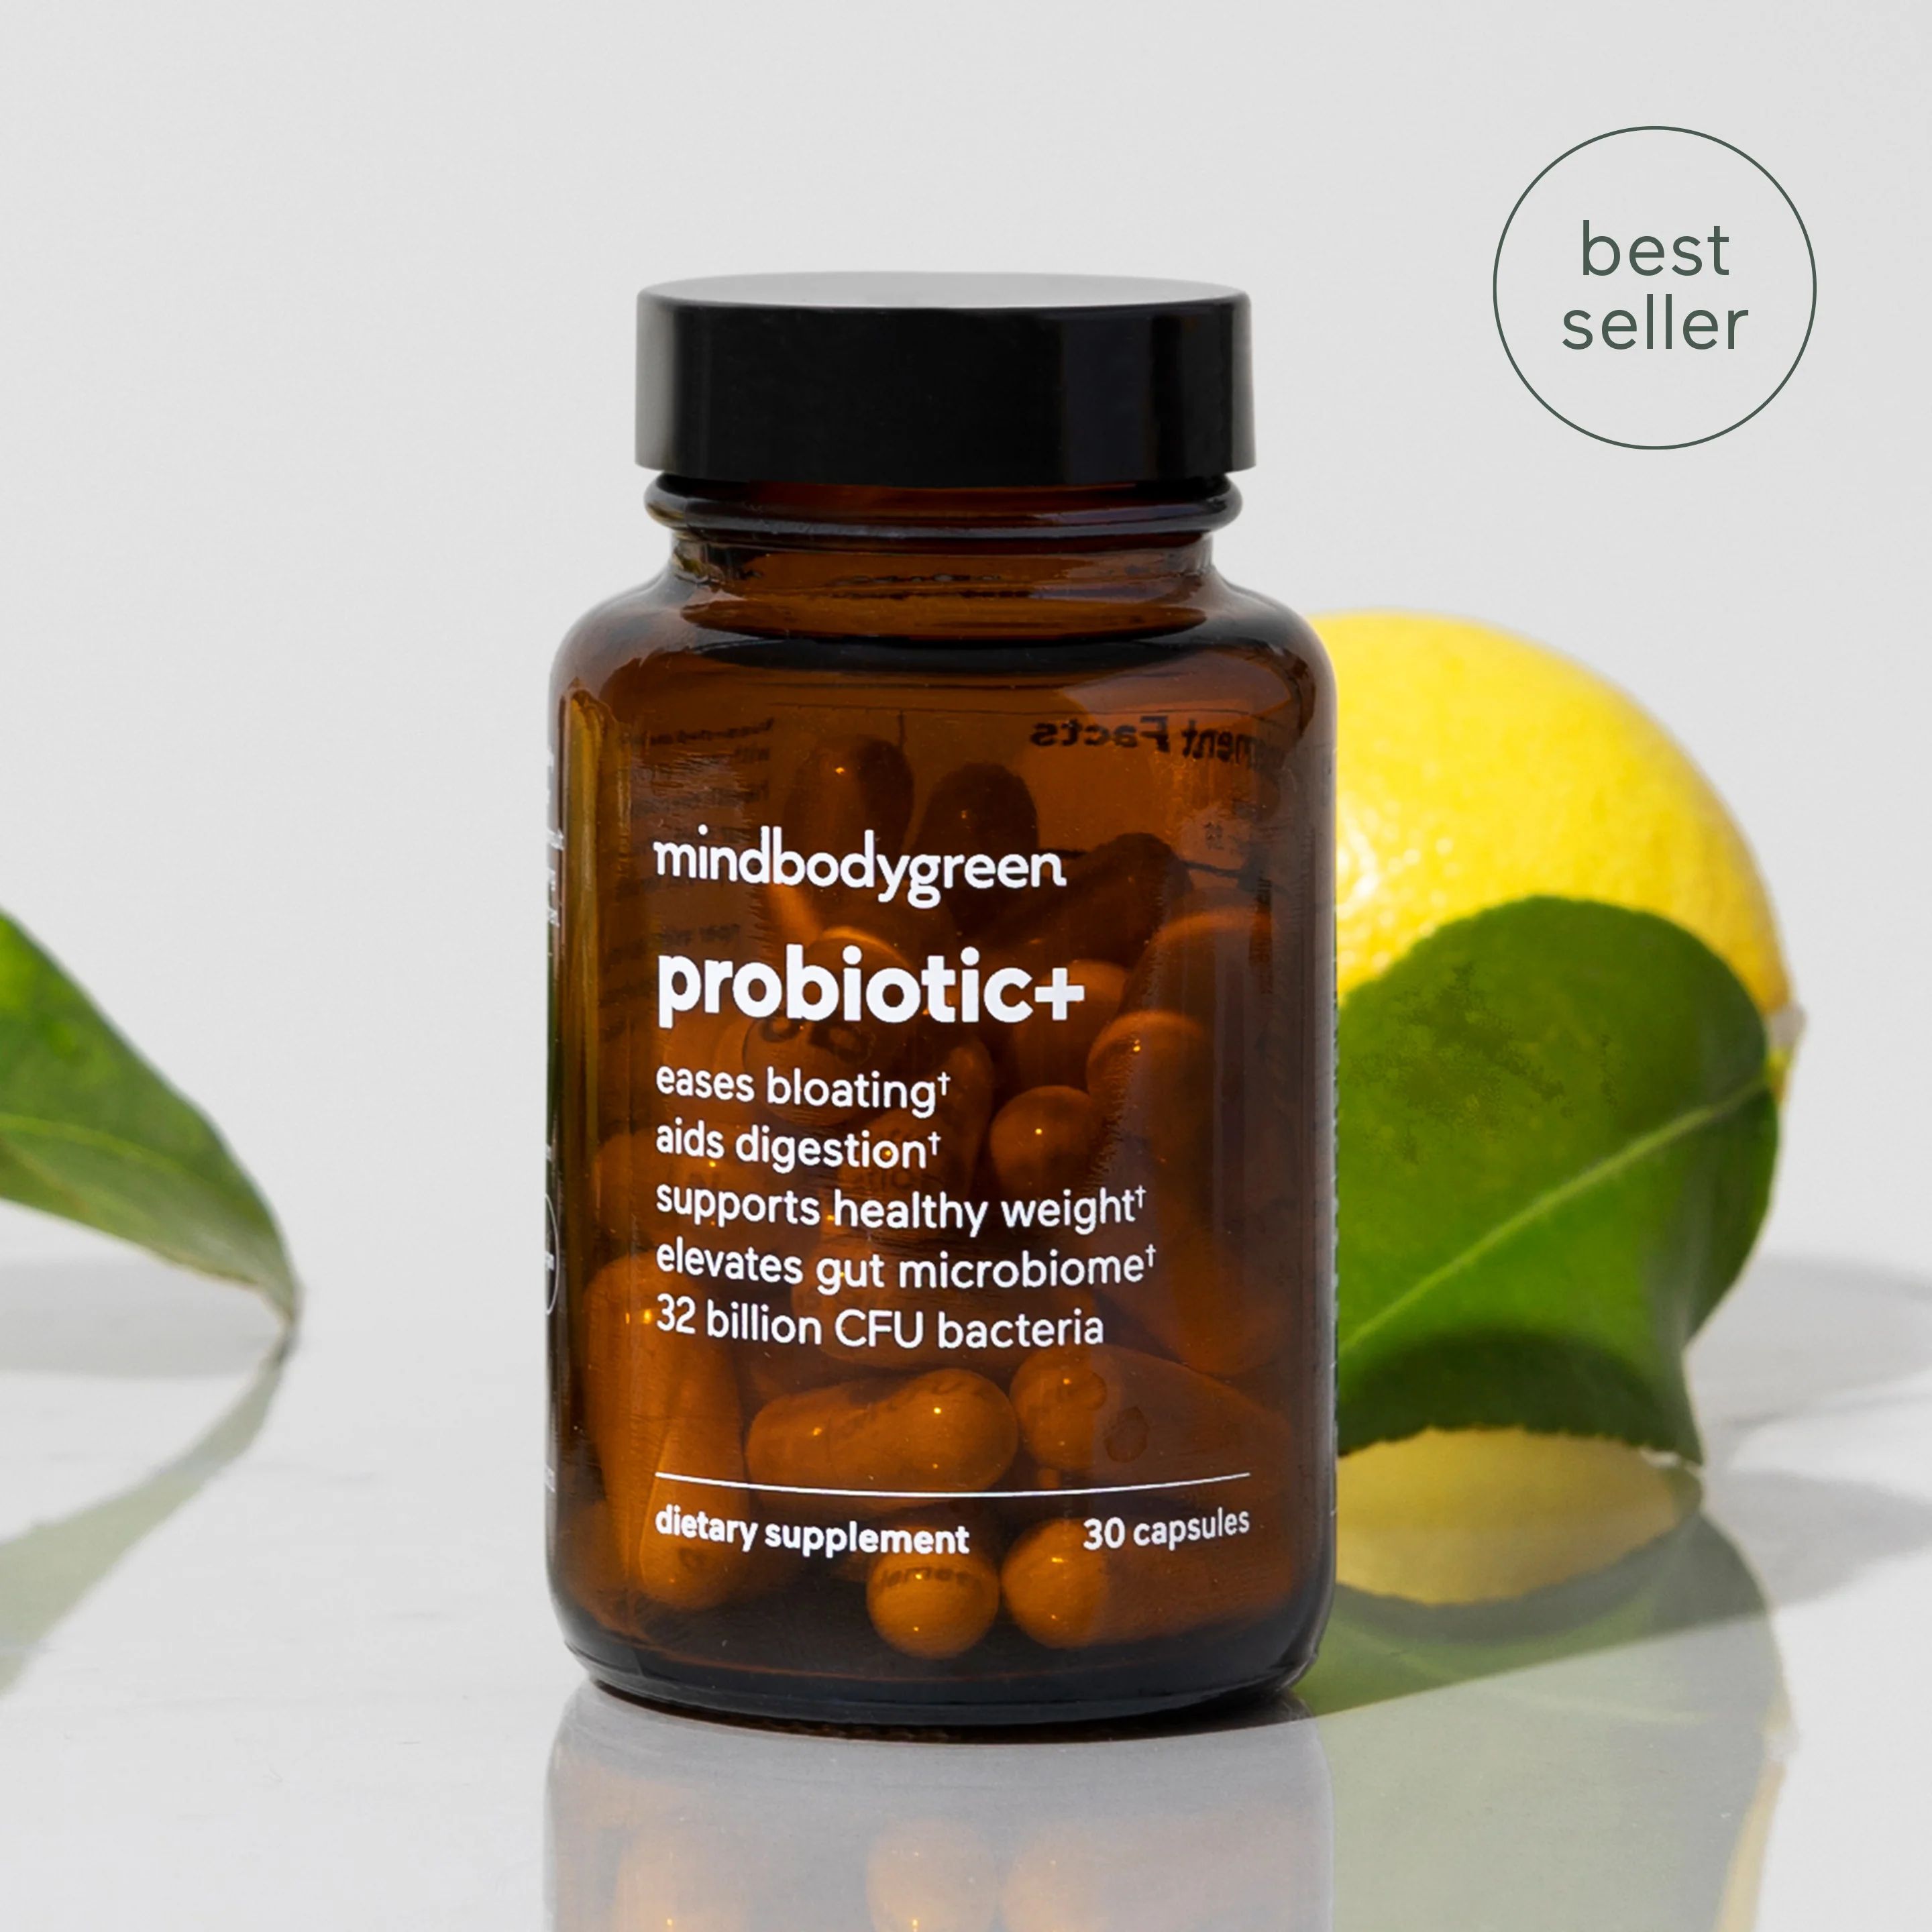 probiotic+ | mindbodygreen